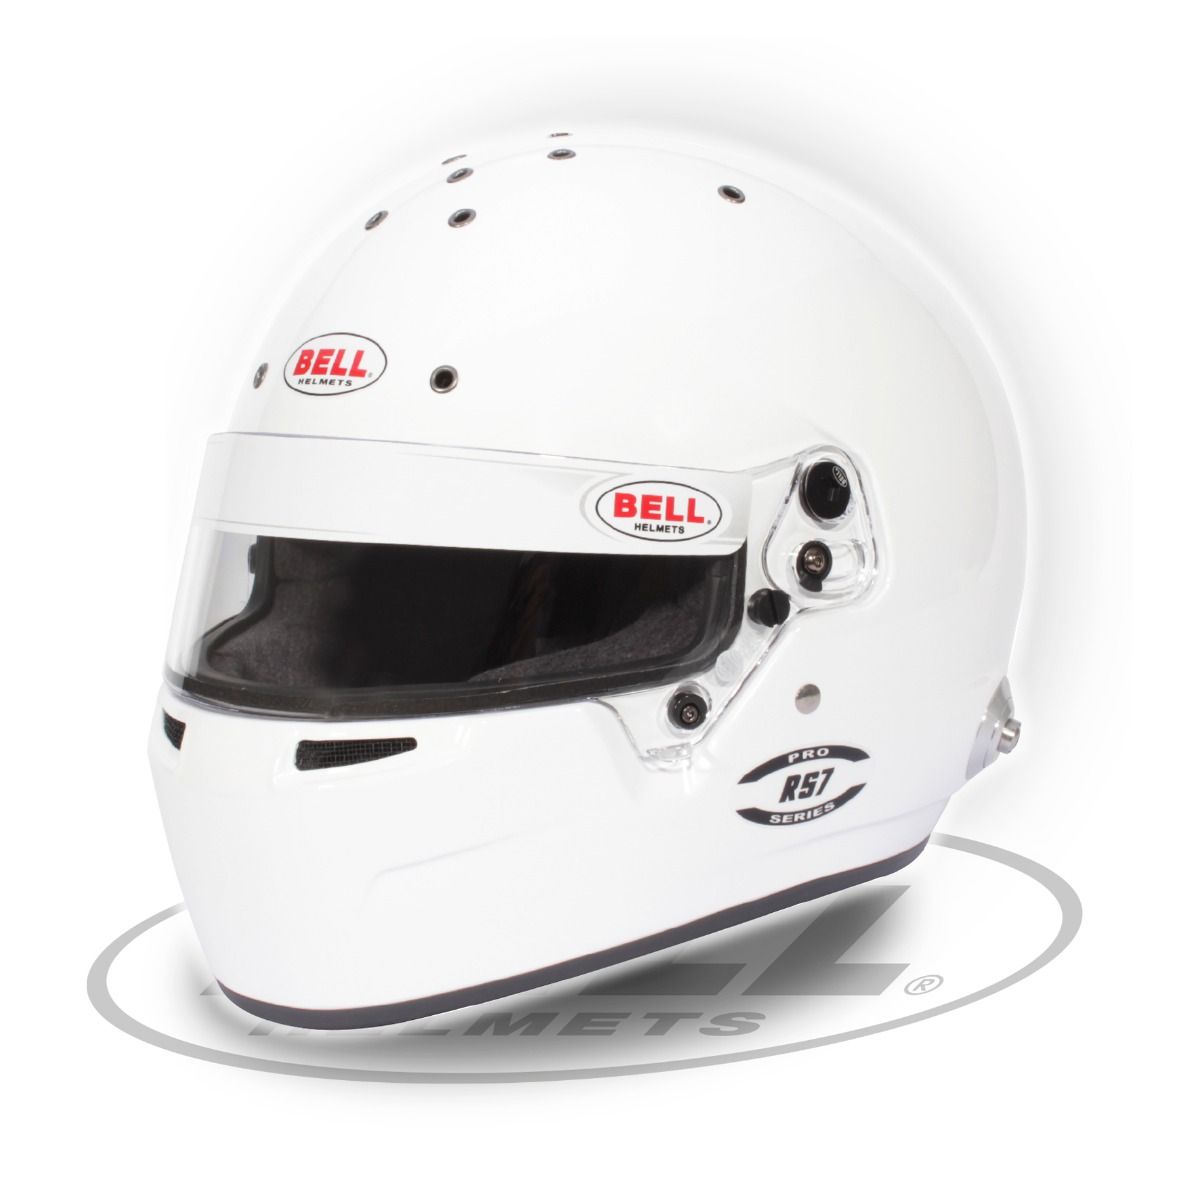 Picture of BELL RS7-Pro car/kart helmet white